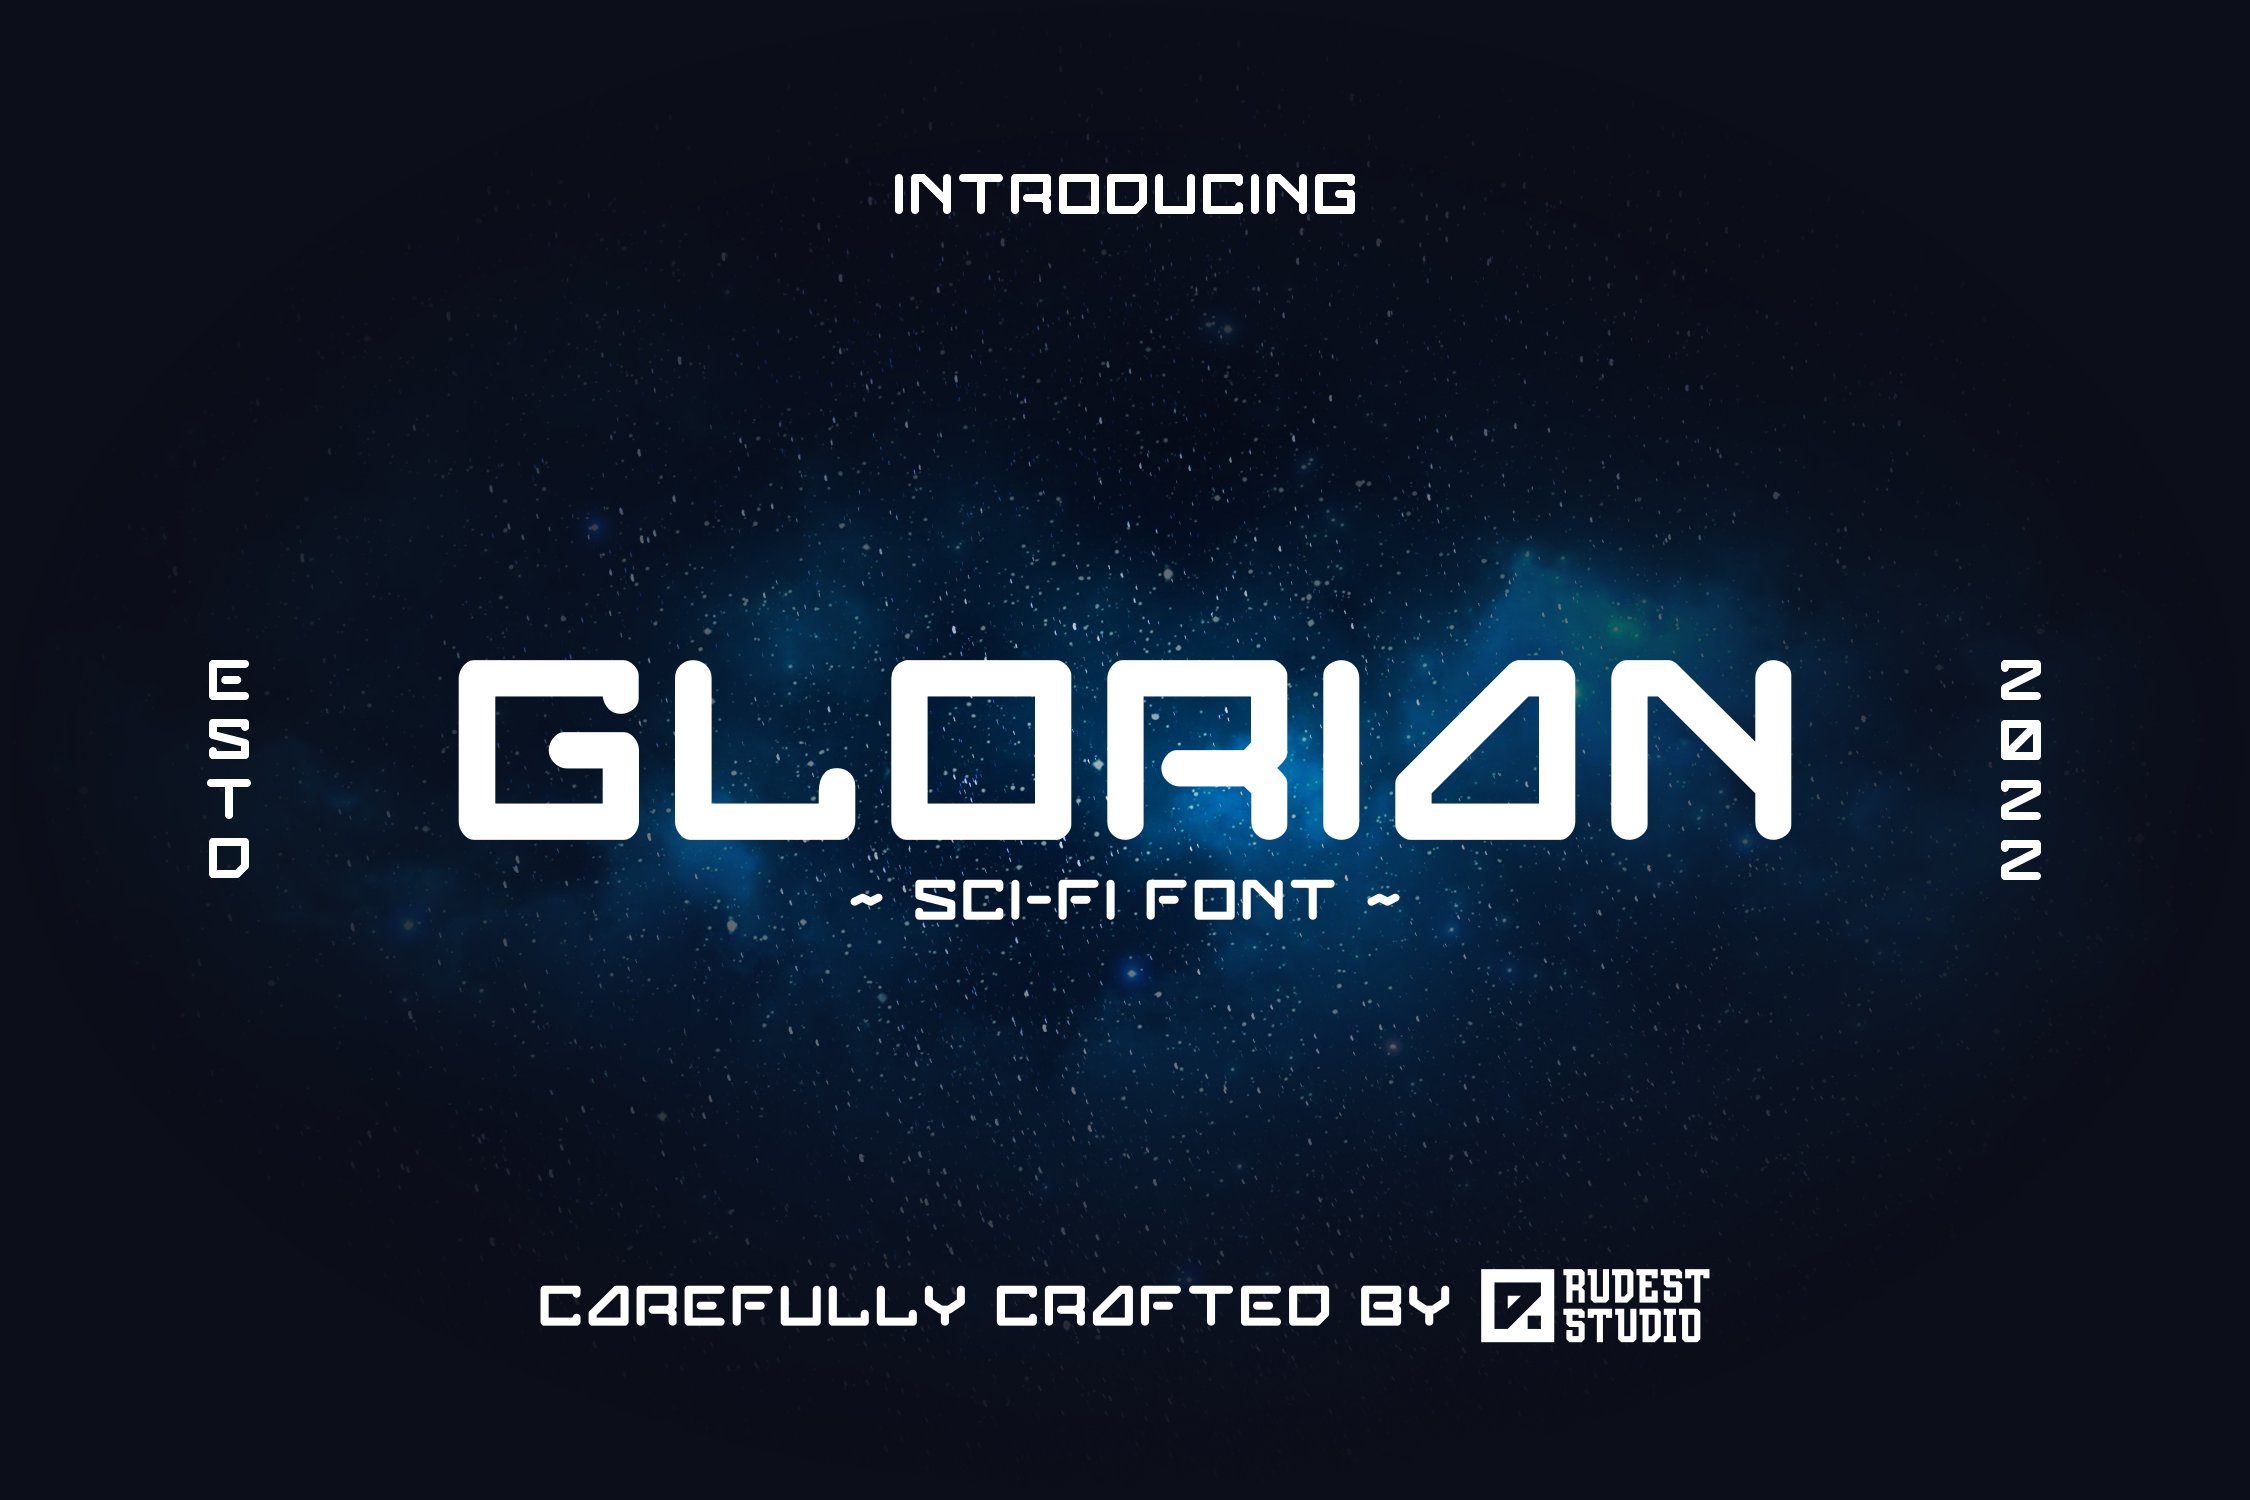 Glorian - Sci-Fi Font cover image.